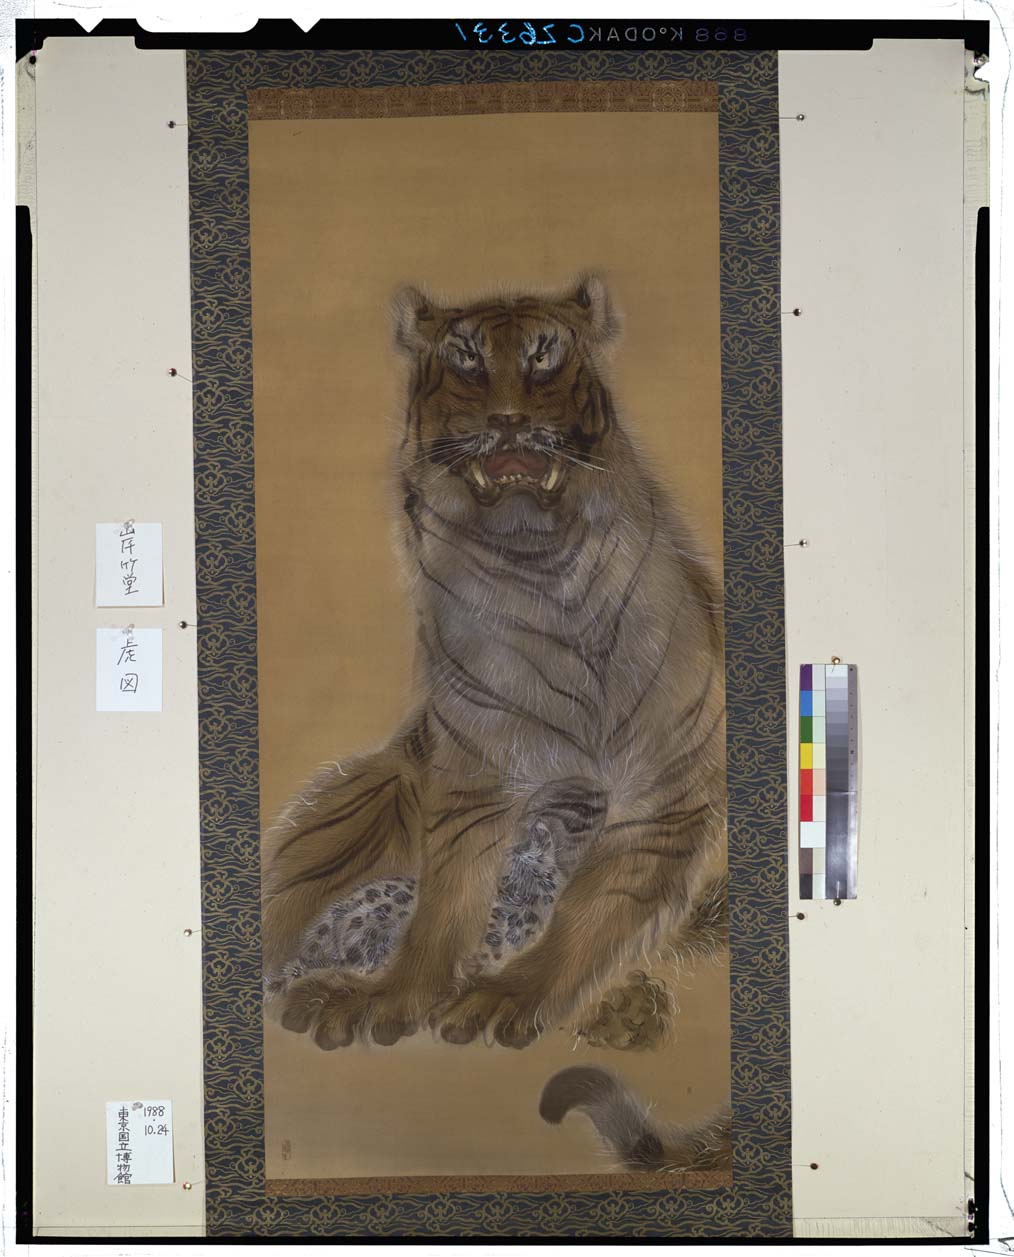 C0026331 虎図 - 東京国立博物館 画像検索